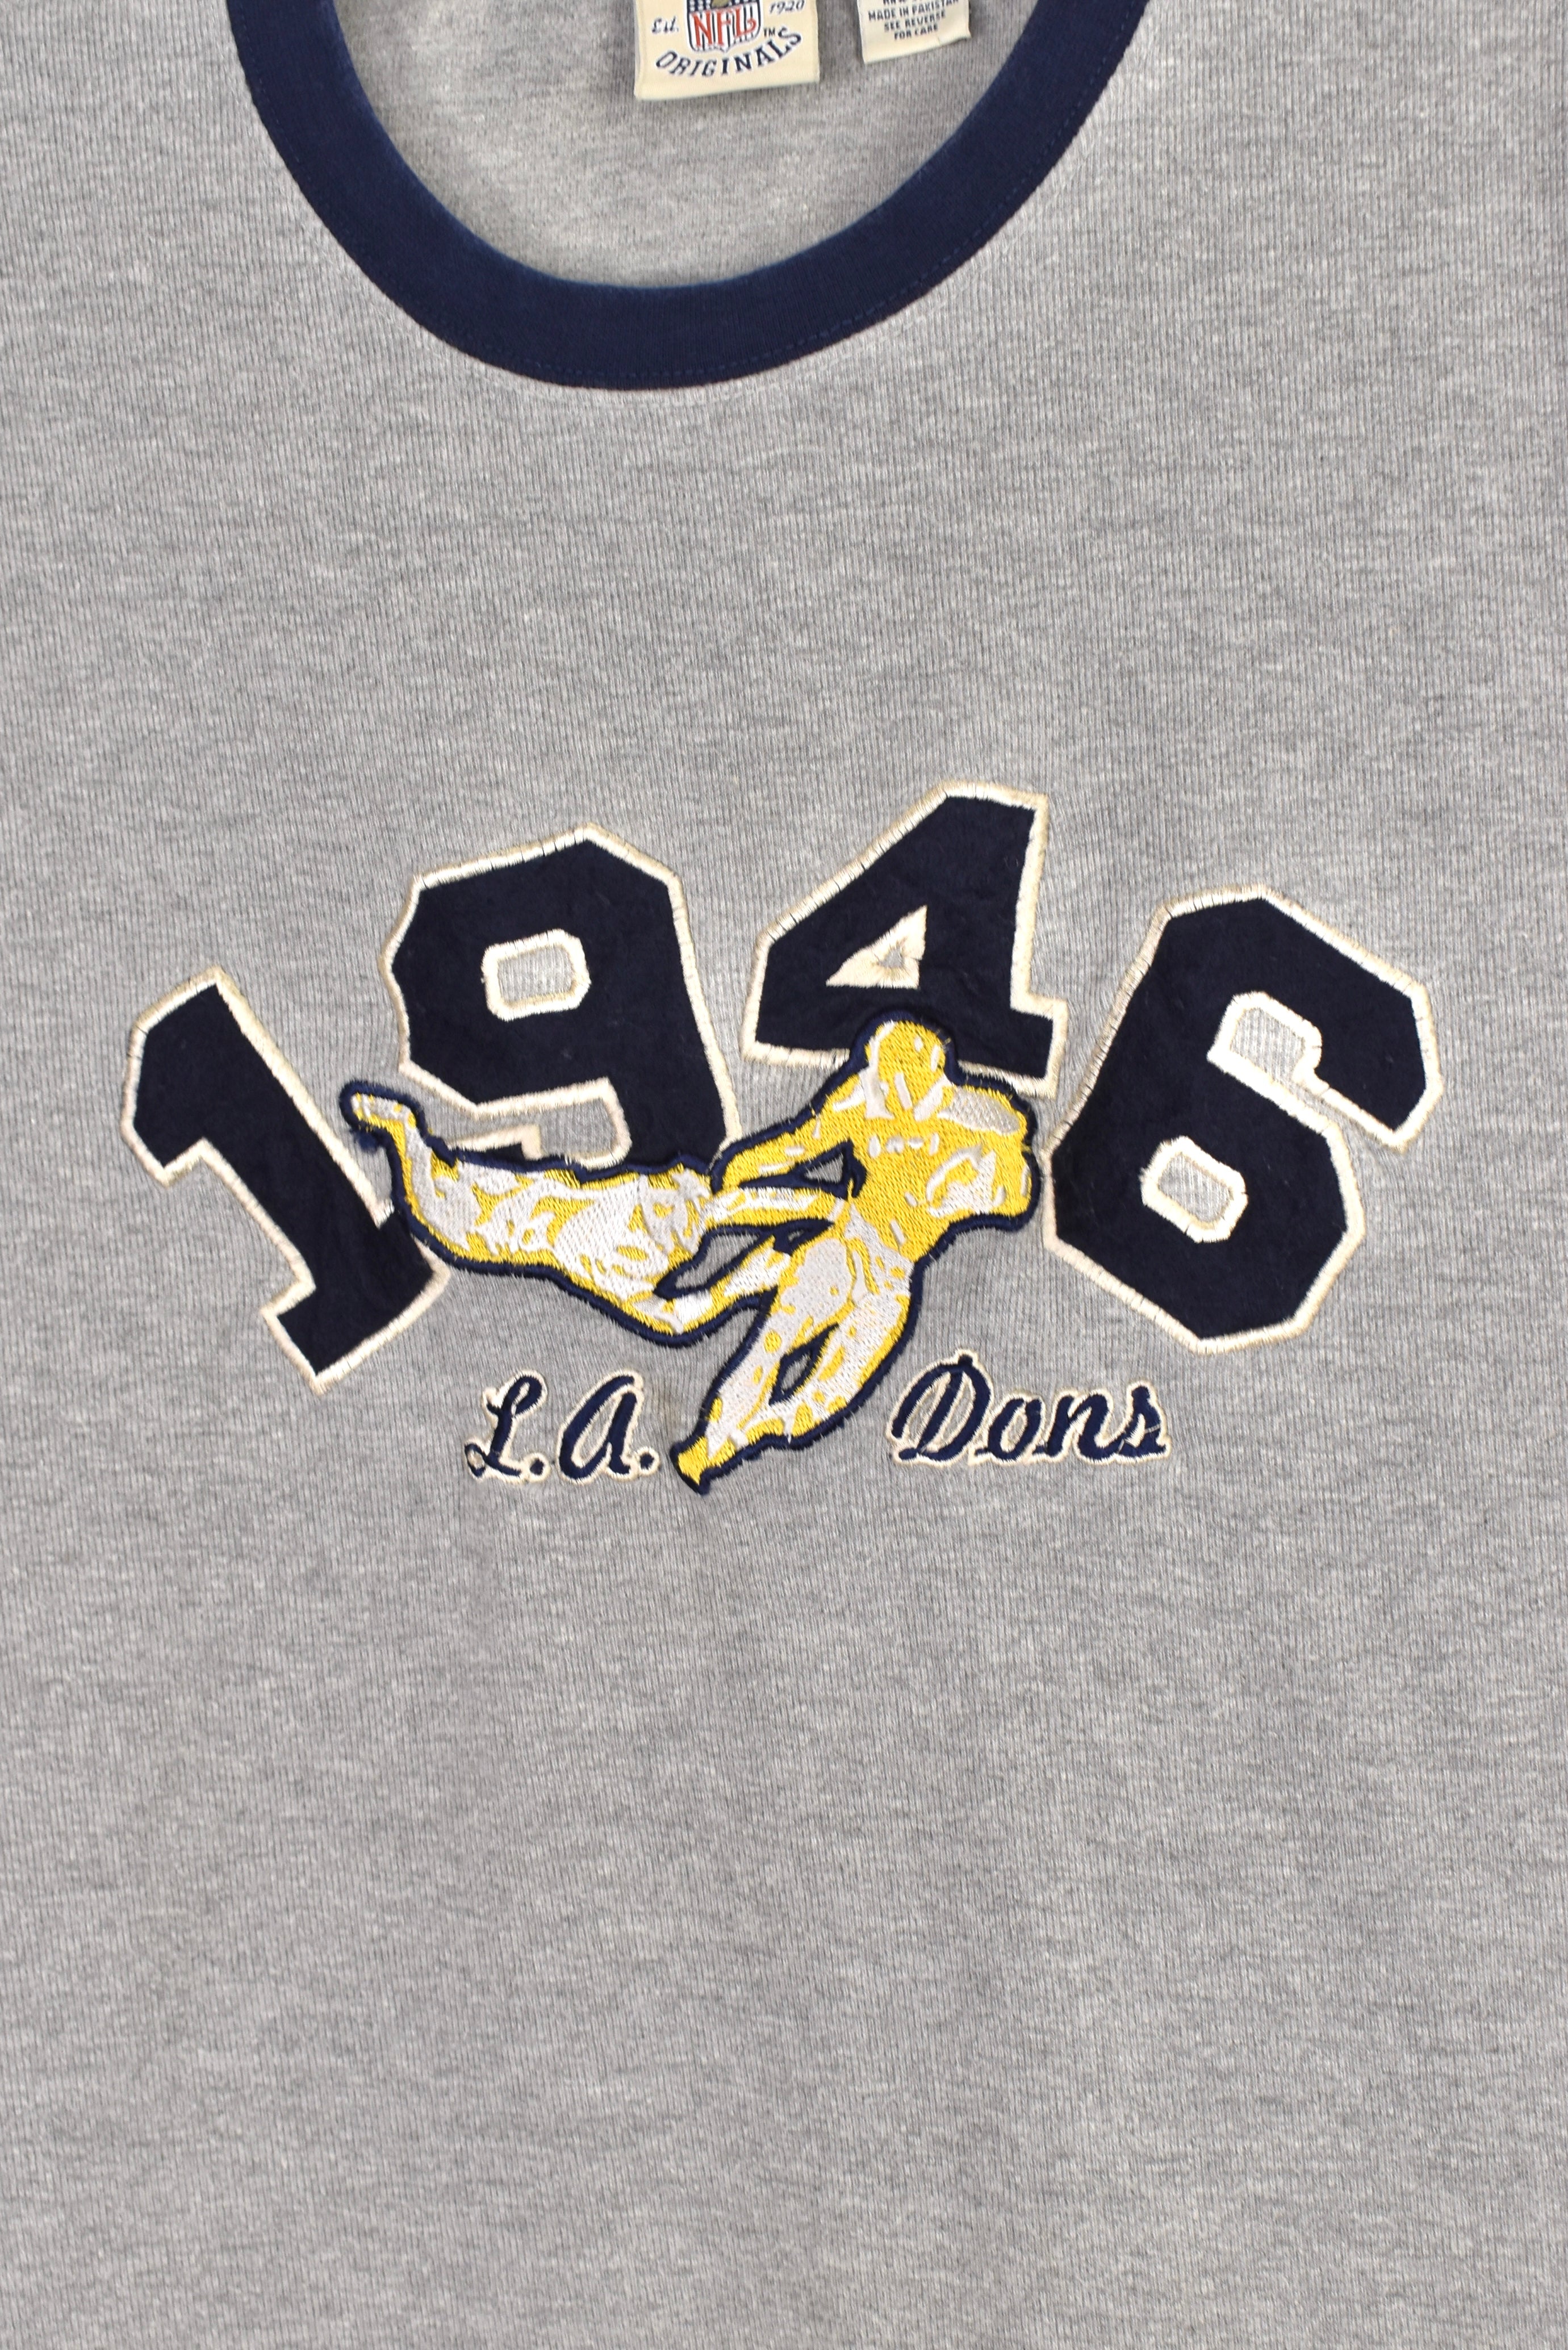 Modern LA Dons sweatshirt XXL, NFL grey embroidered crewneck